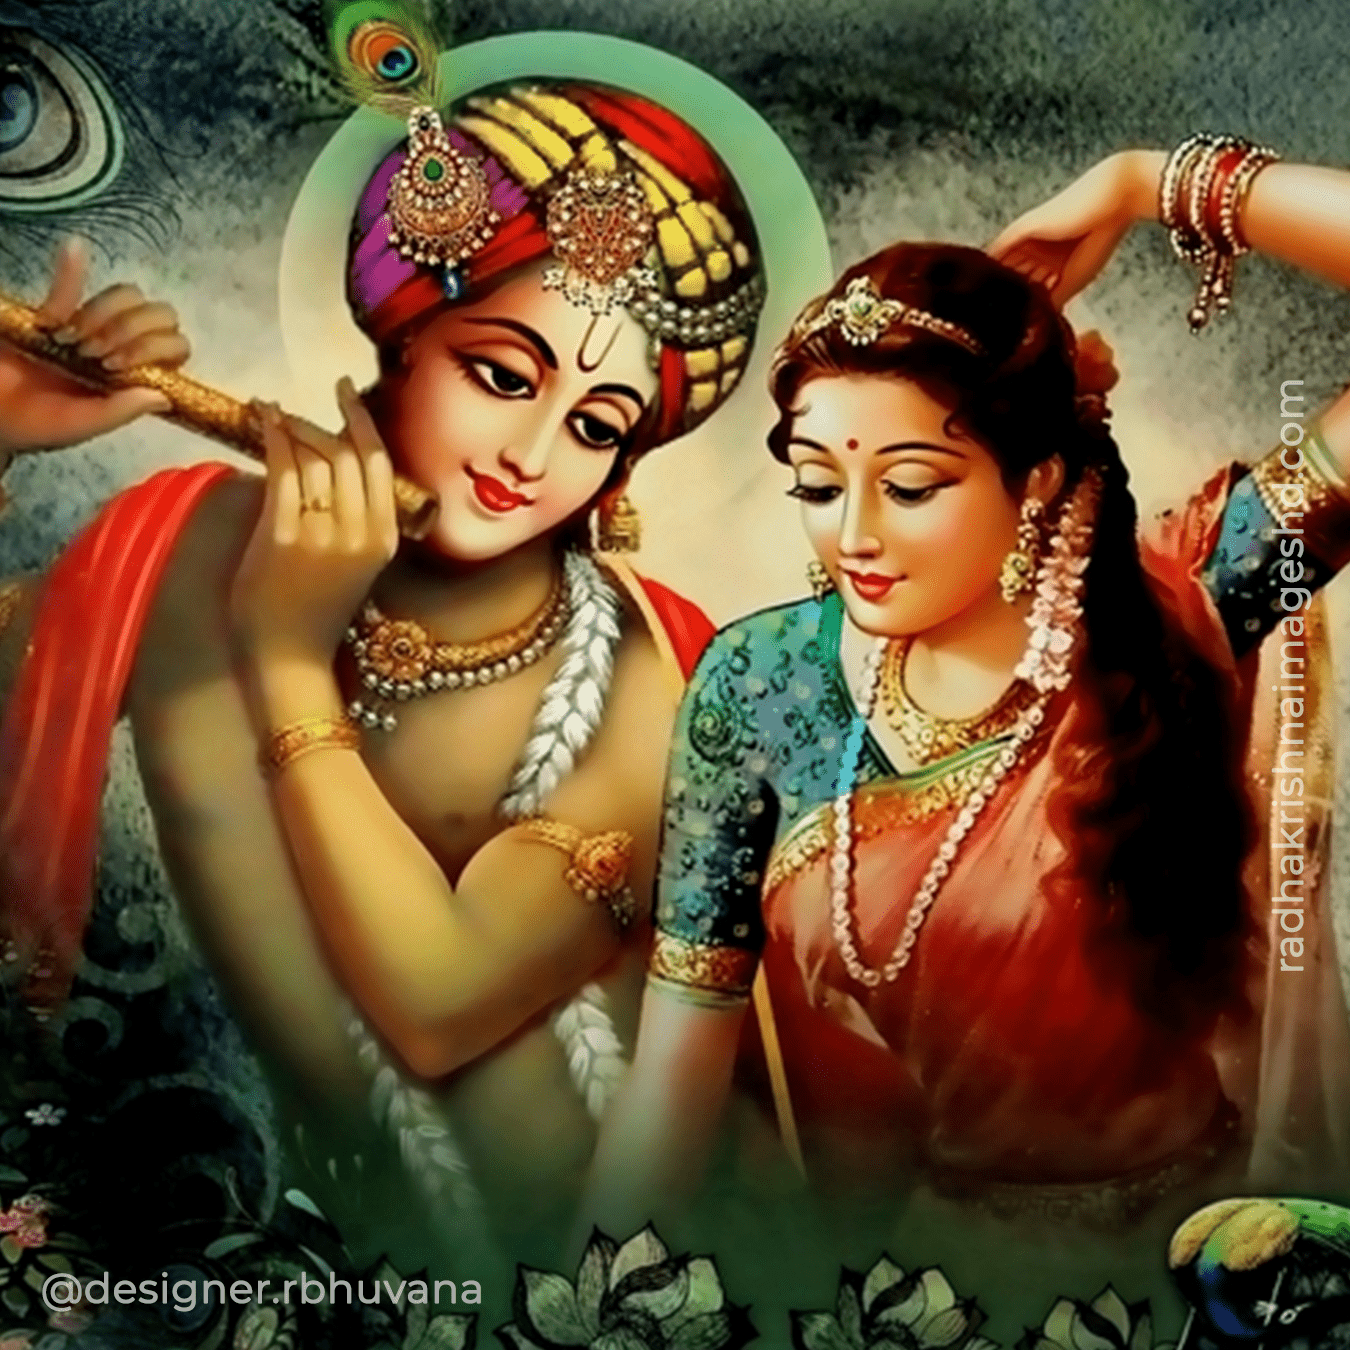 Top 999+ radha krishna images hd download – Amazing Collection radha krishna images hd download Full 4K